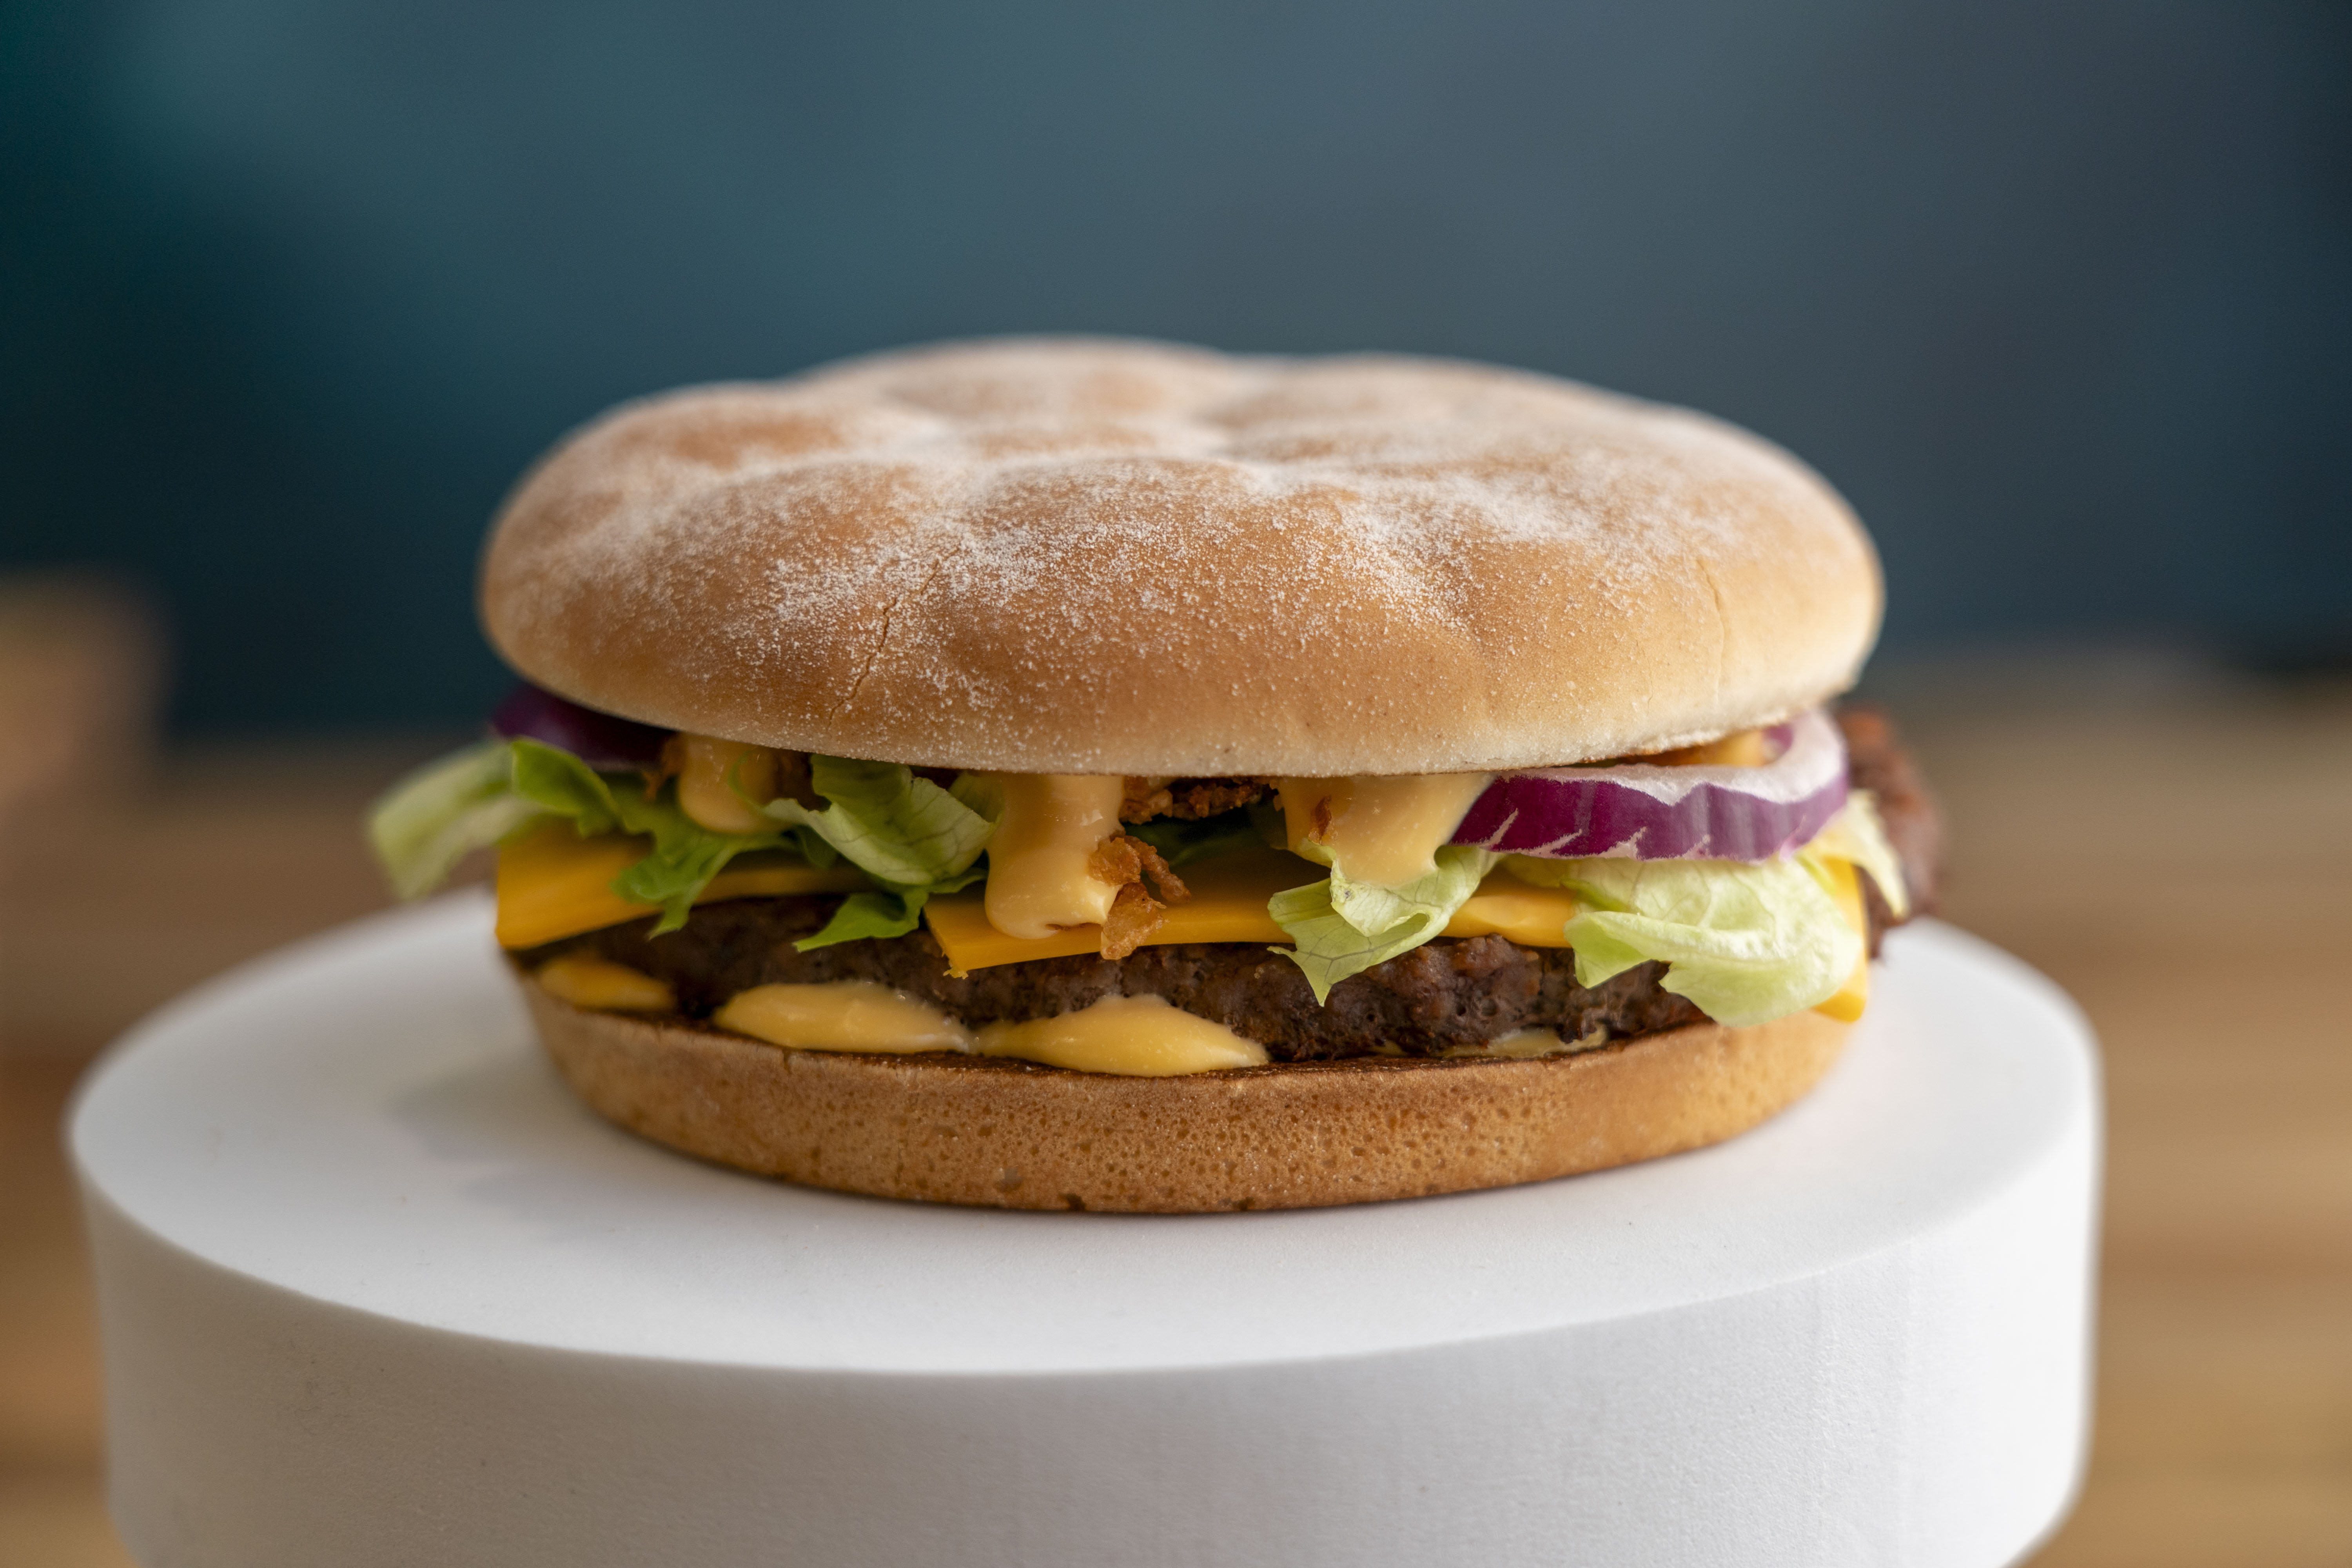 McDonald's is launching the Big & Cheesy burger